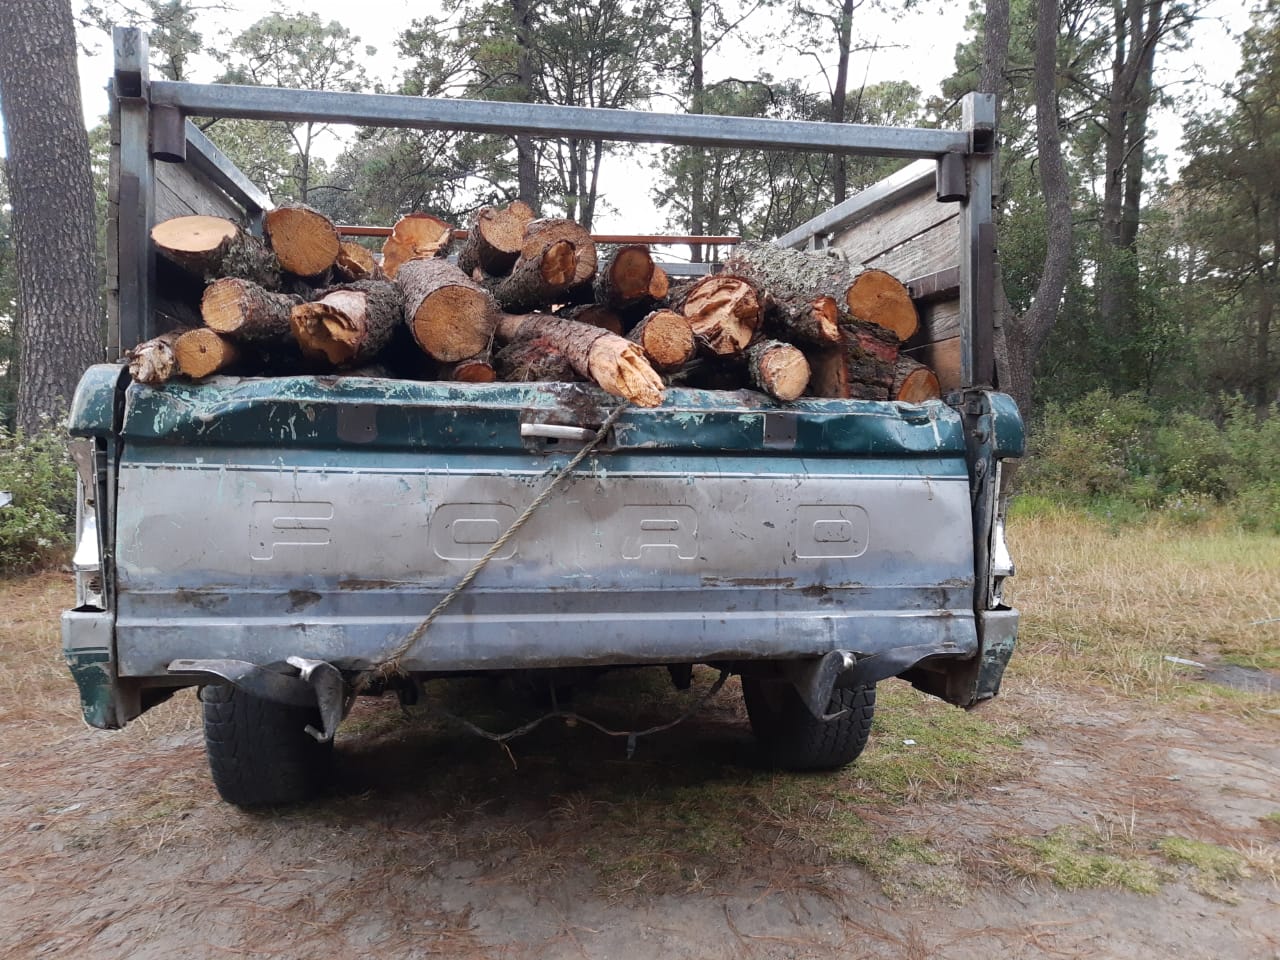 Esta semana se han asegurado vehículos y madera, así como destruido tres hornos de carbón vegetal